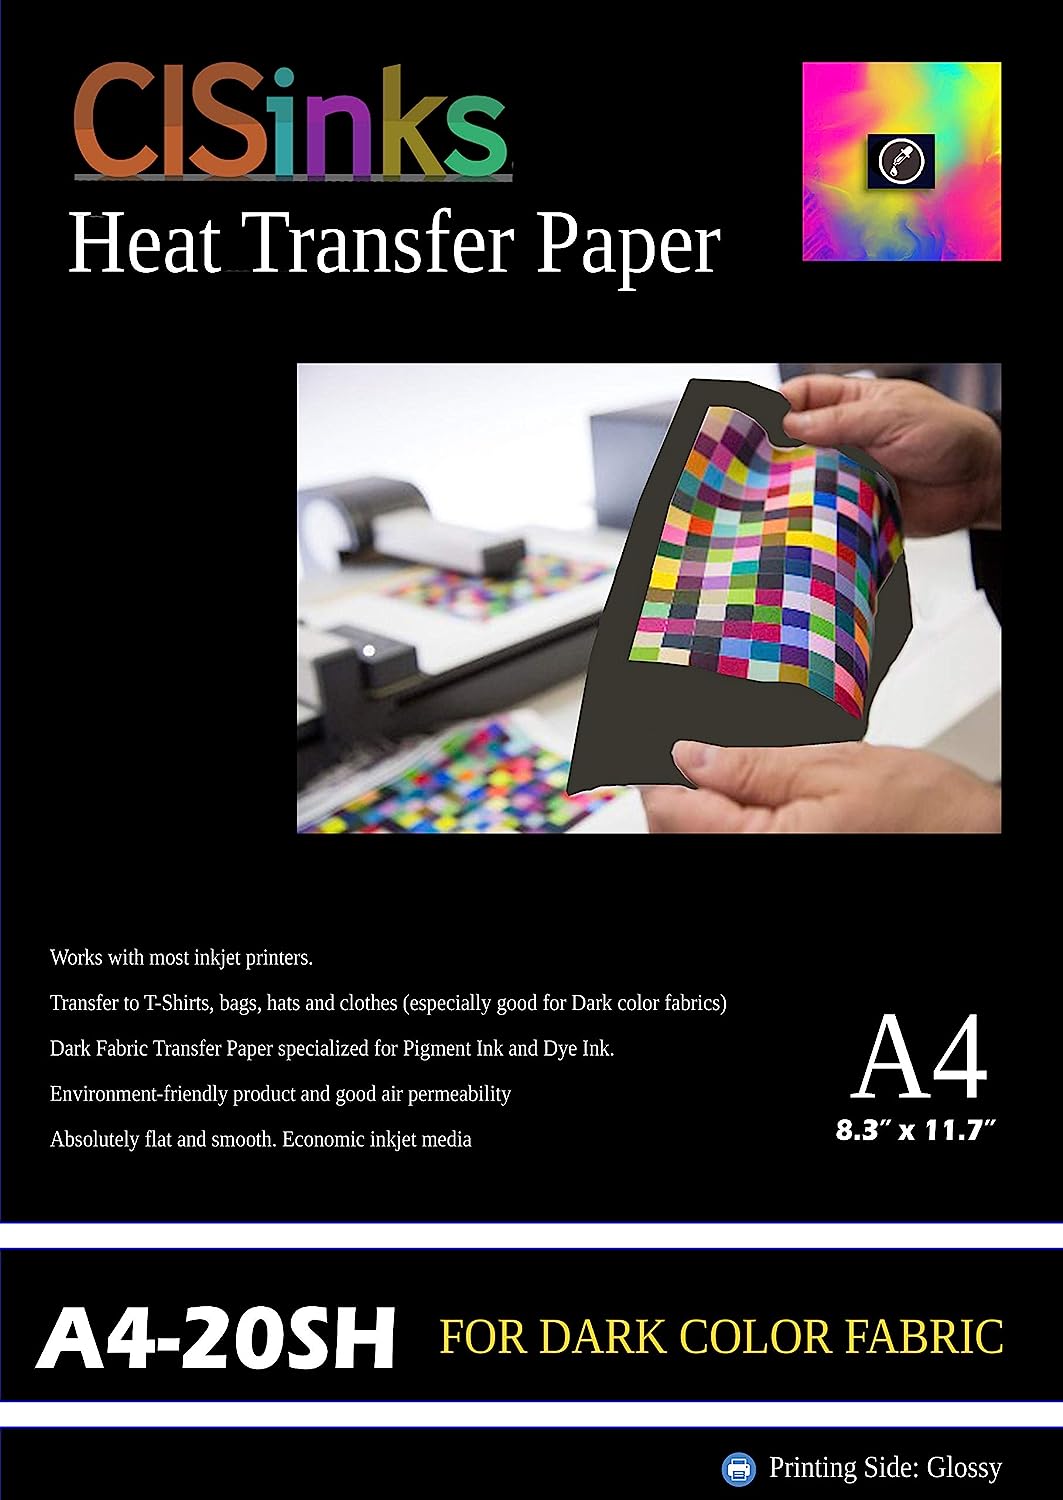 8.3" x 11.7" (A4) Dark Fabric Inkjet Heat Transfer Paper - 60 Sheets